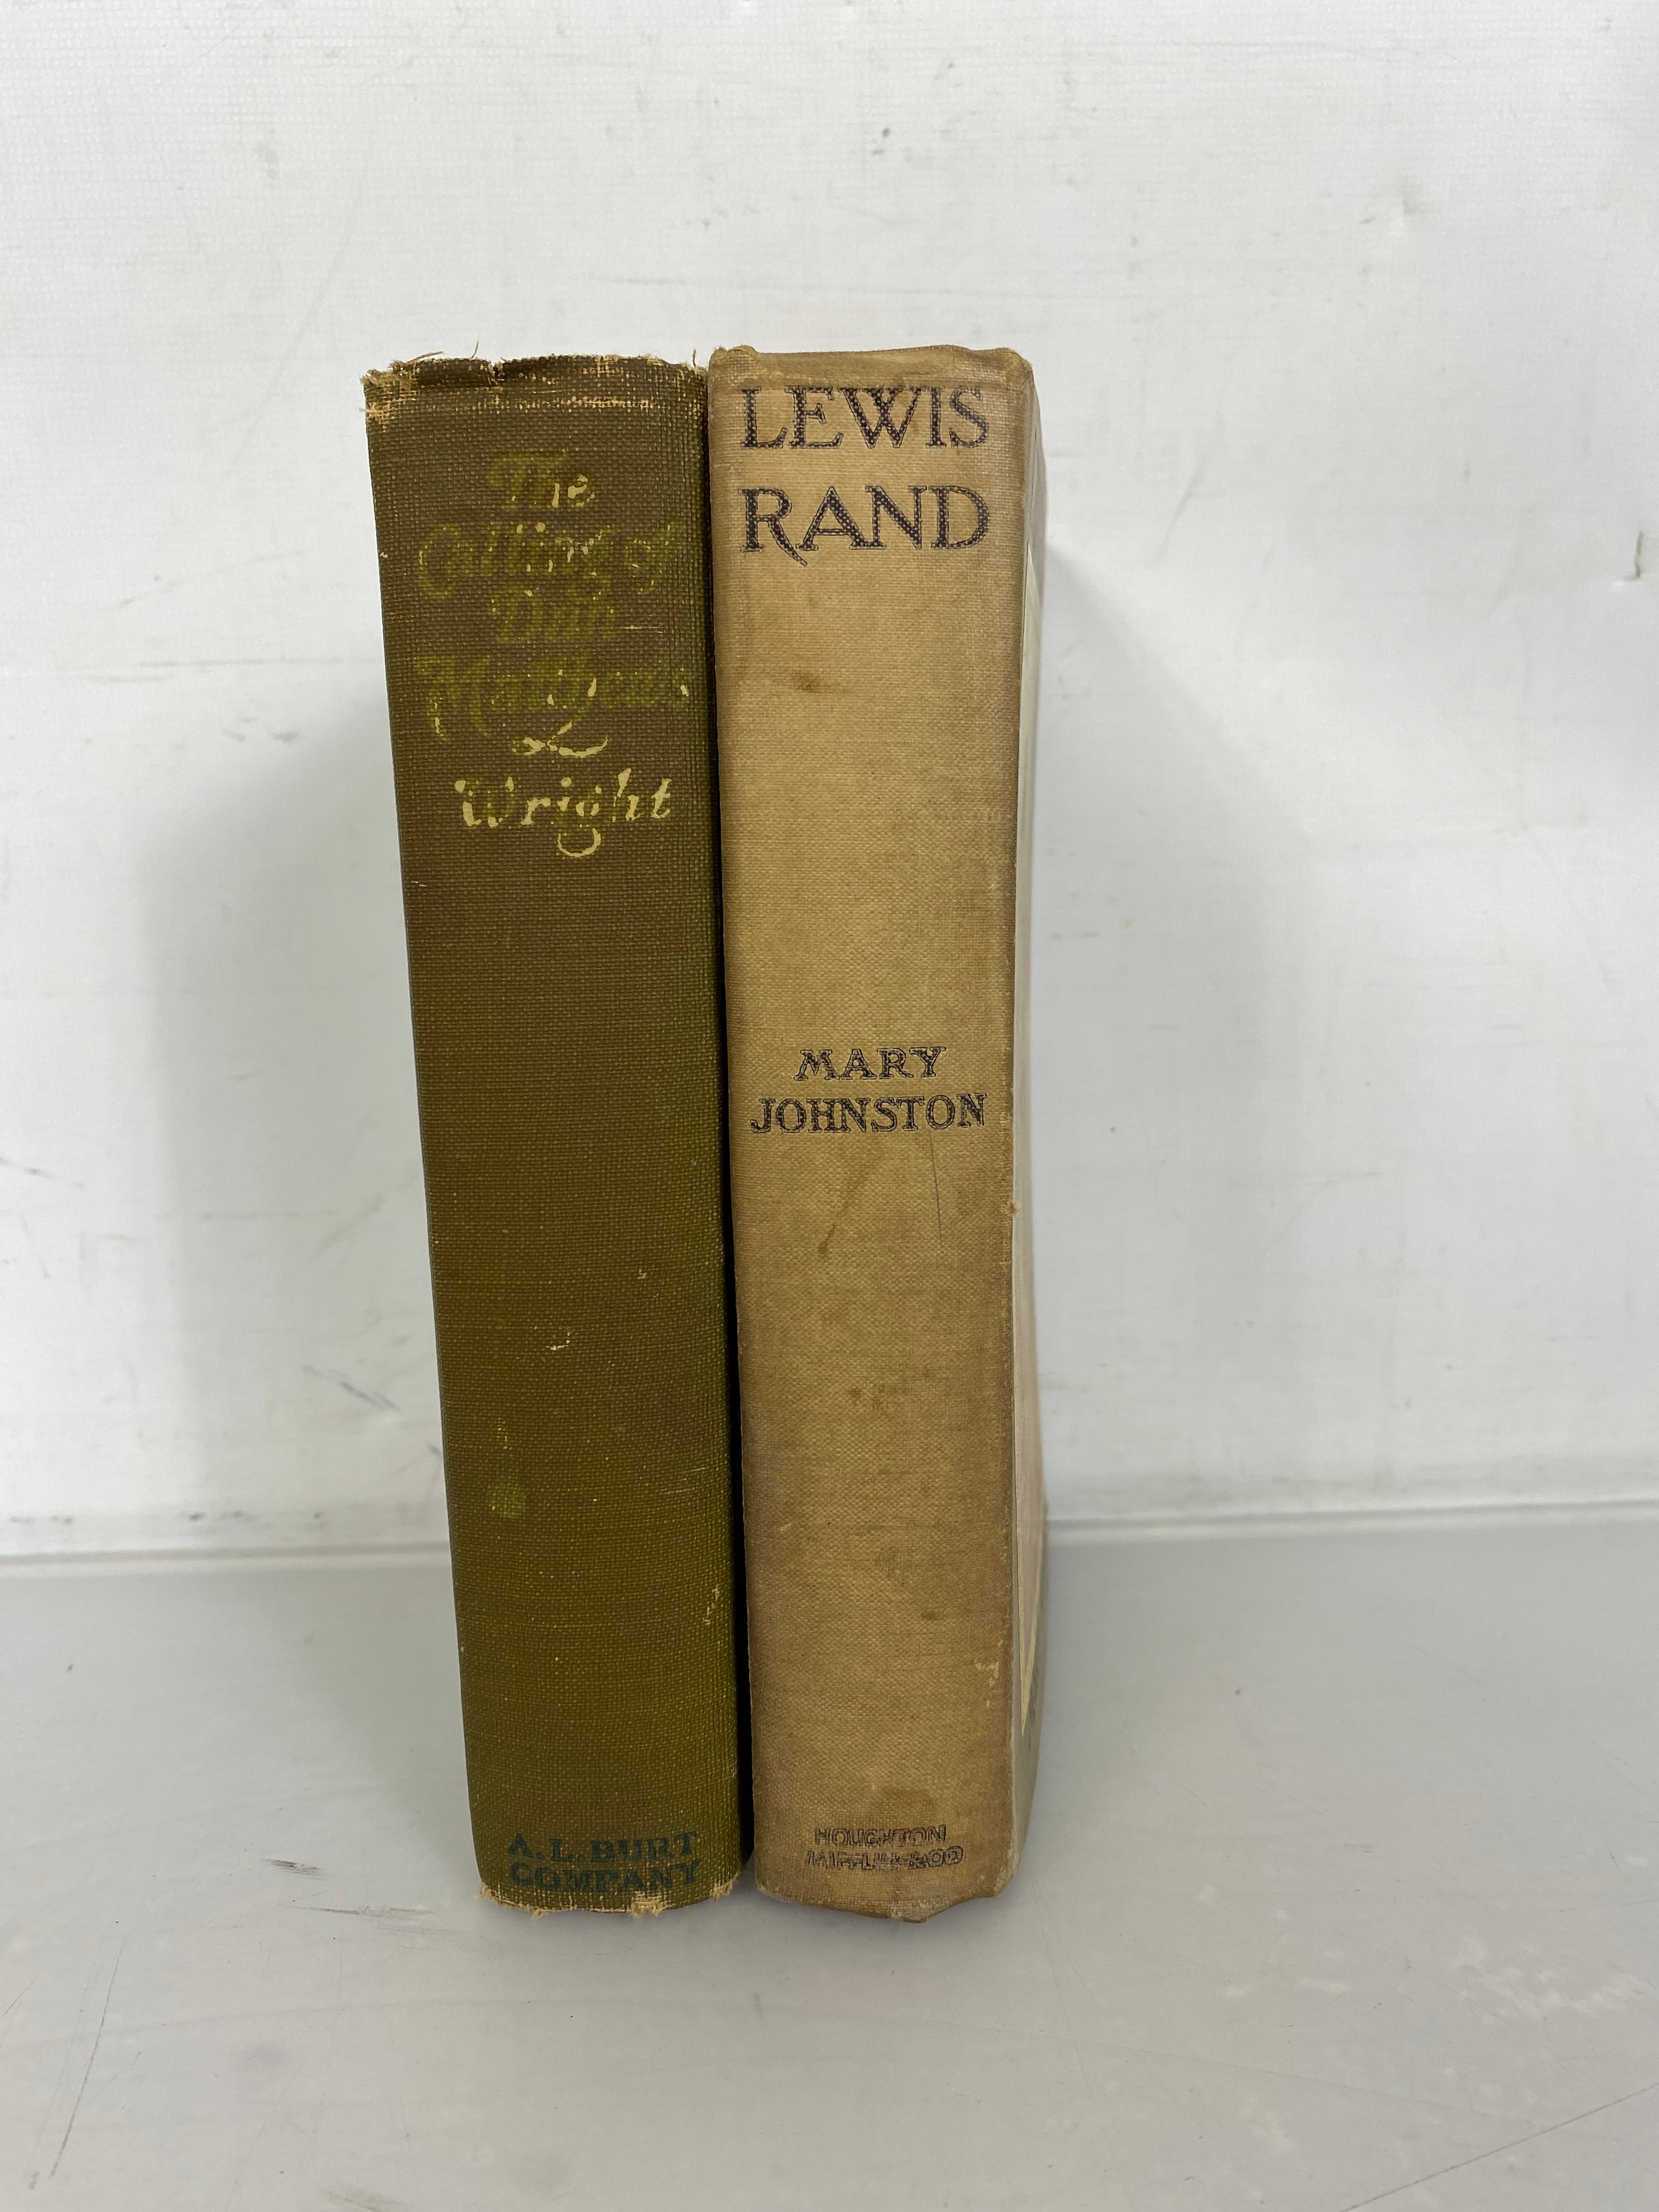 Lot of 2 Antique Novels: The Calling of Dan Matthews (1909) and Lewis Rand (1908) HC